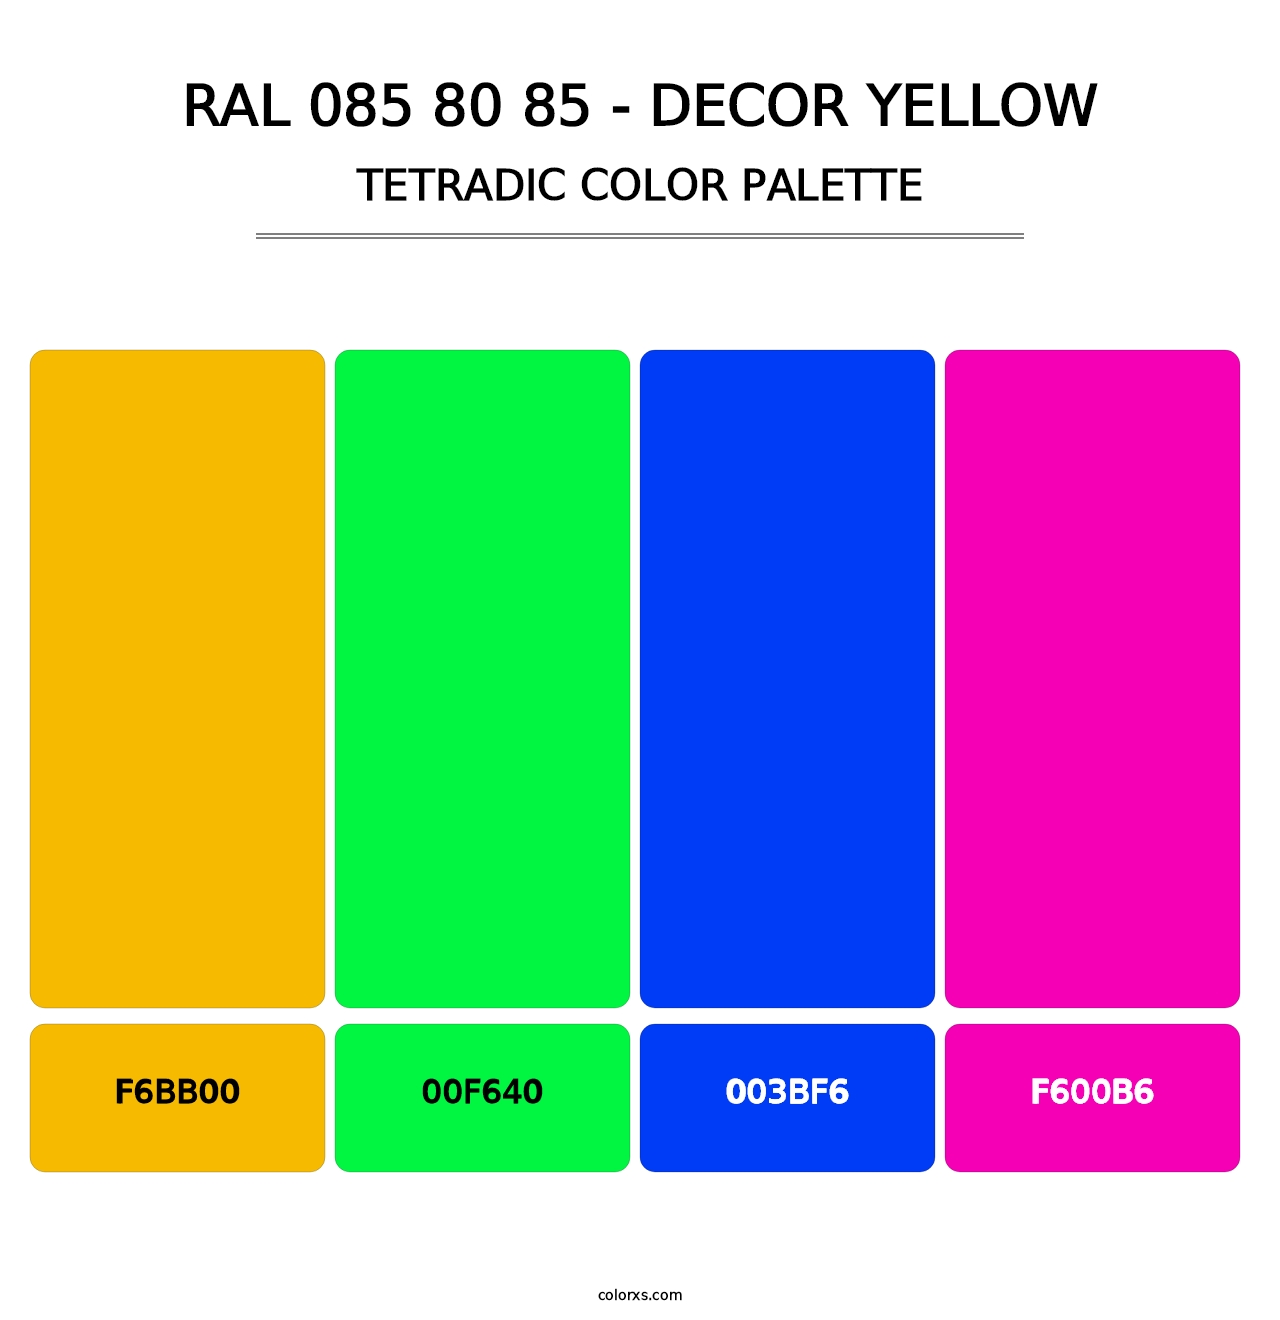 RAL 085 80 85 - Decor Yellow - Tetradic Color Palette